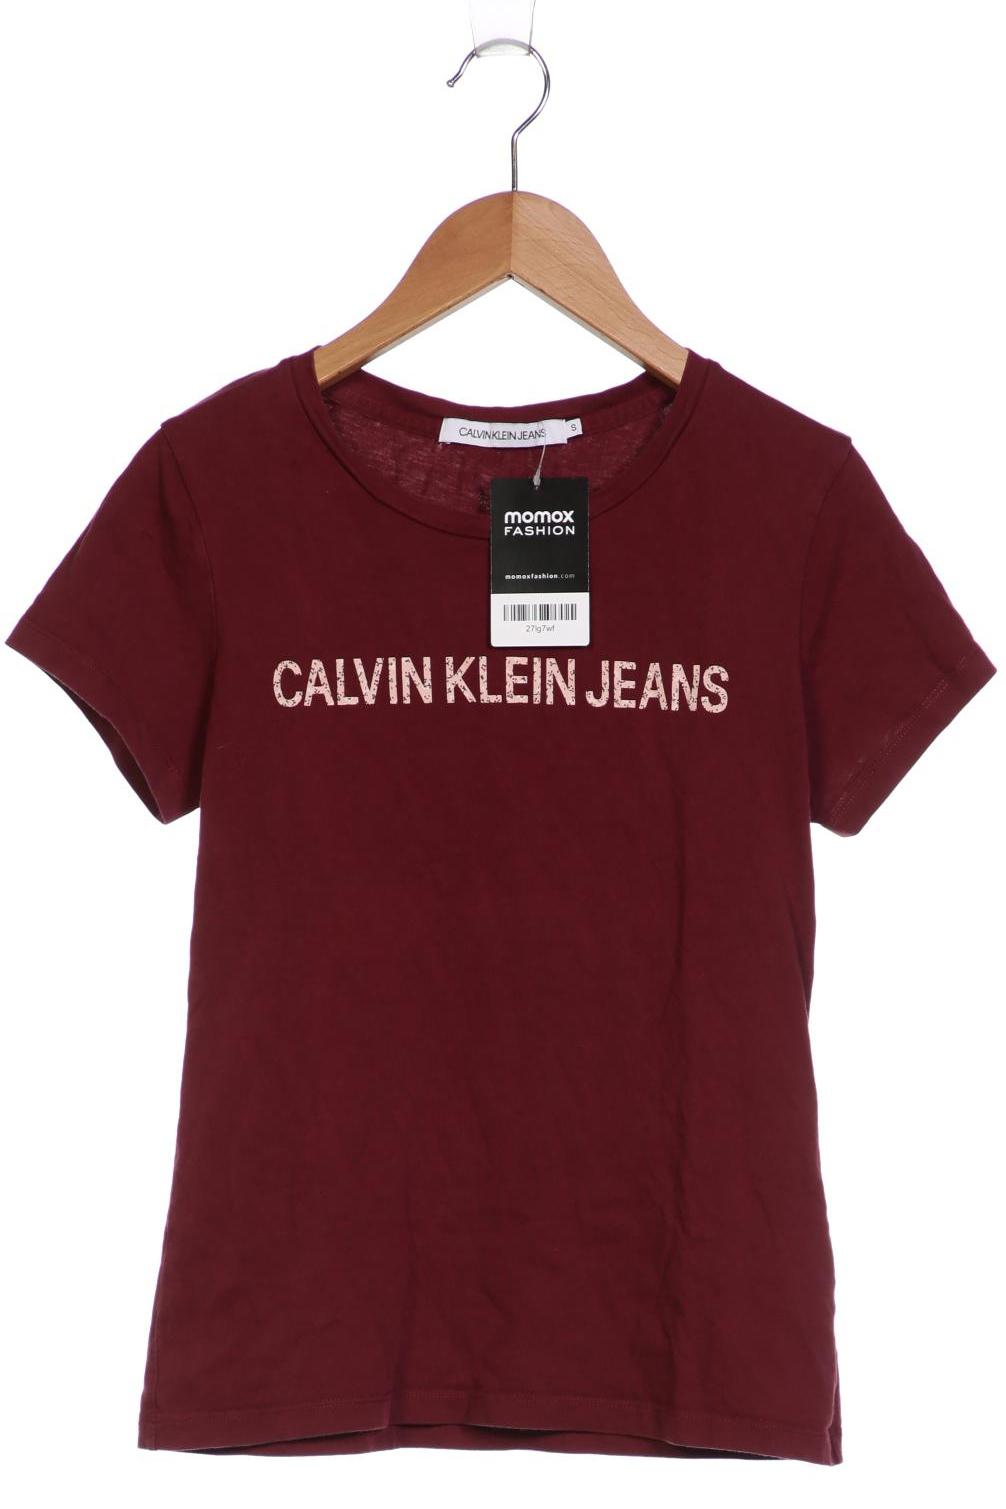 Calvin Klein Jeans Damen T-Shirt, bordeaux von Calvin Klein Jeans